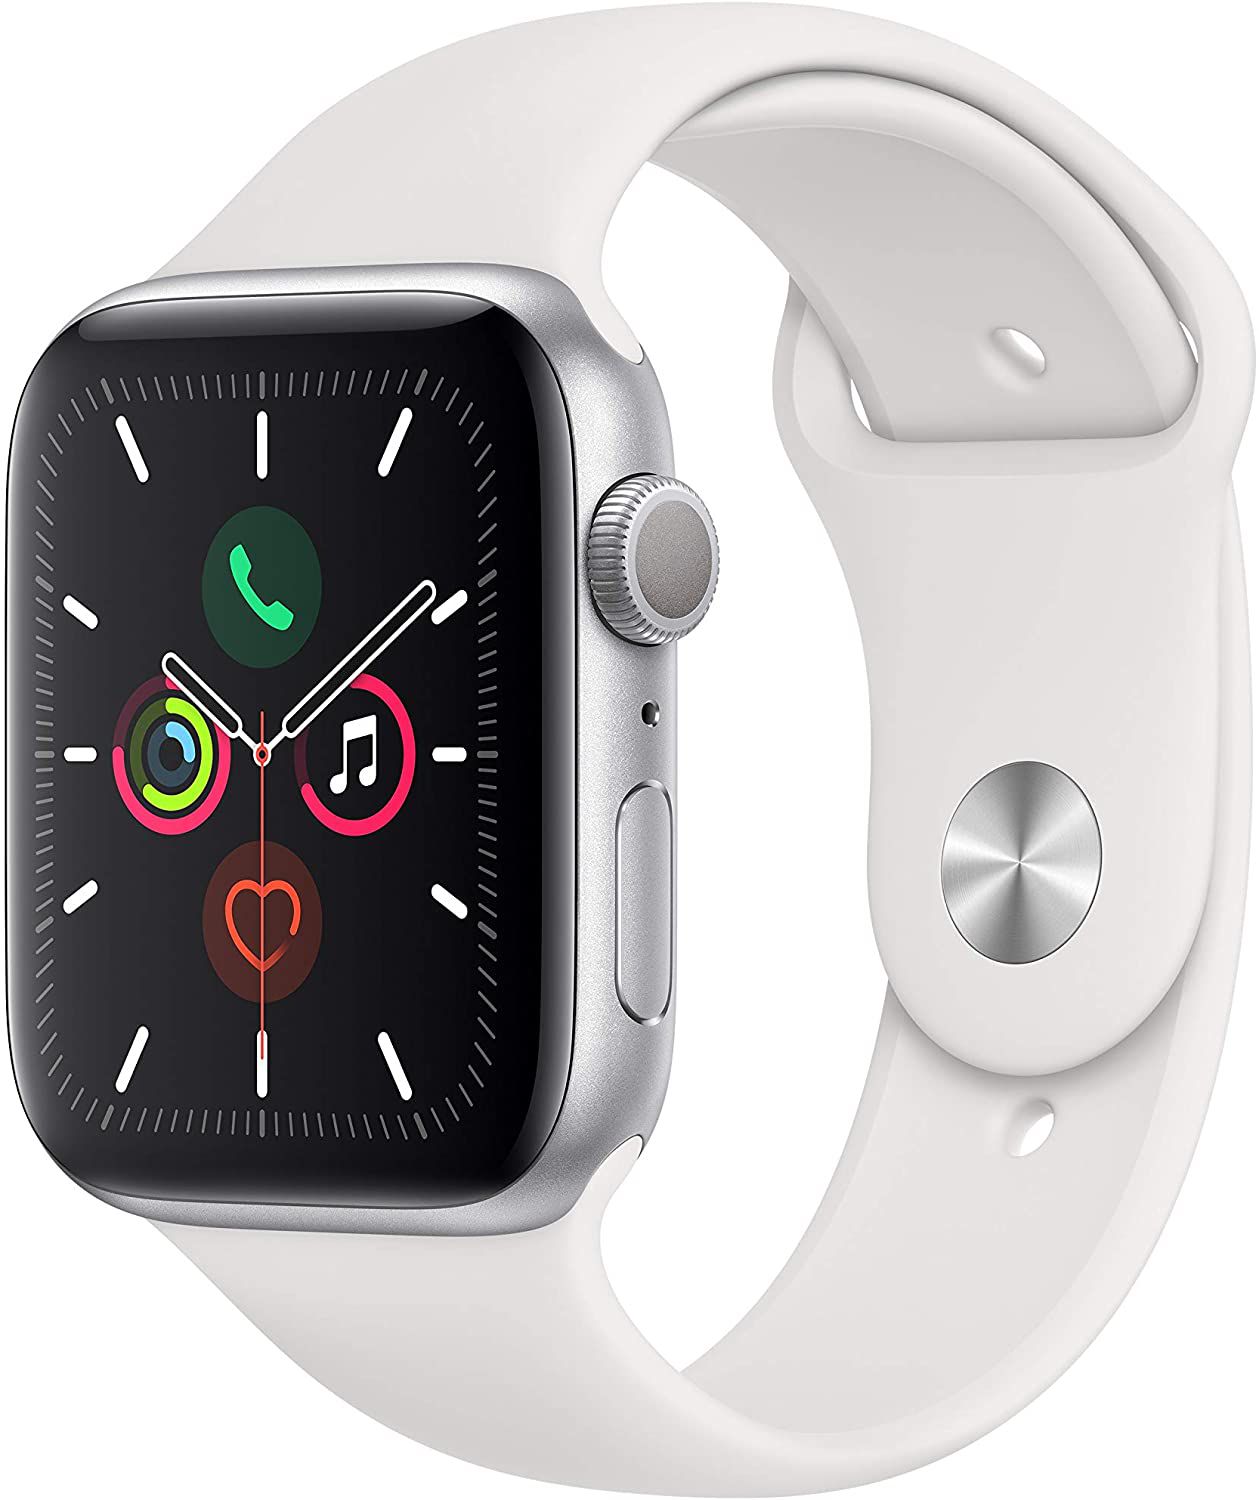 Apple Watch Series 5白色